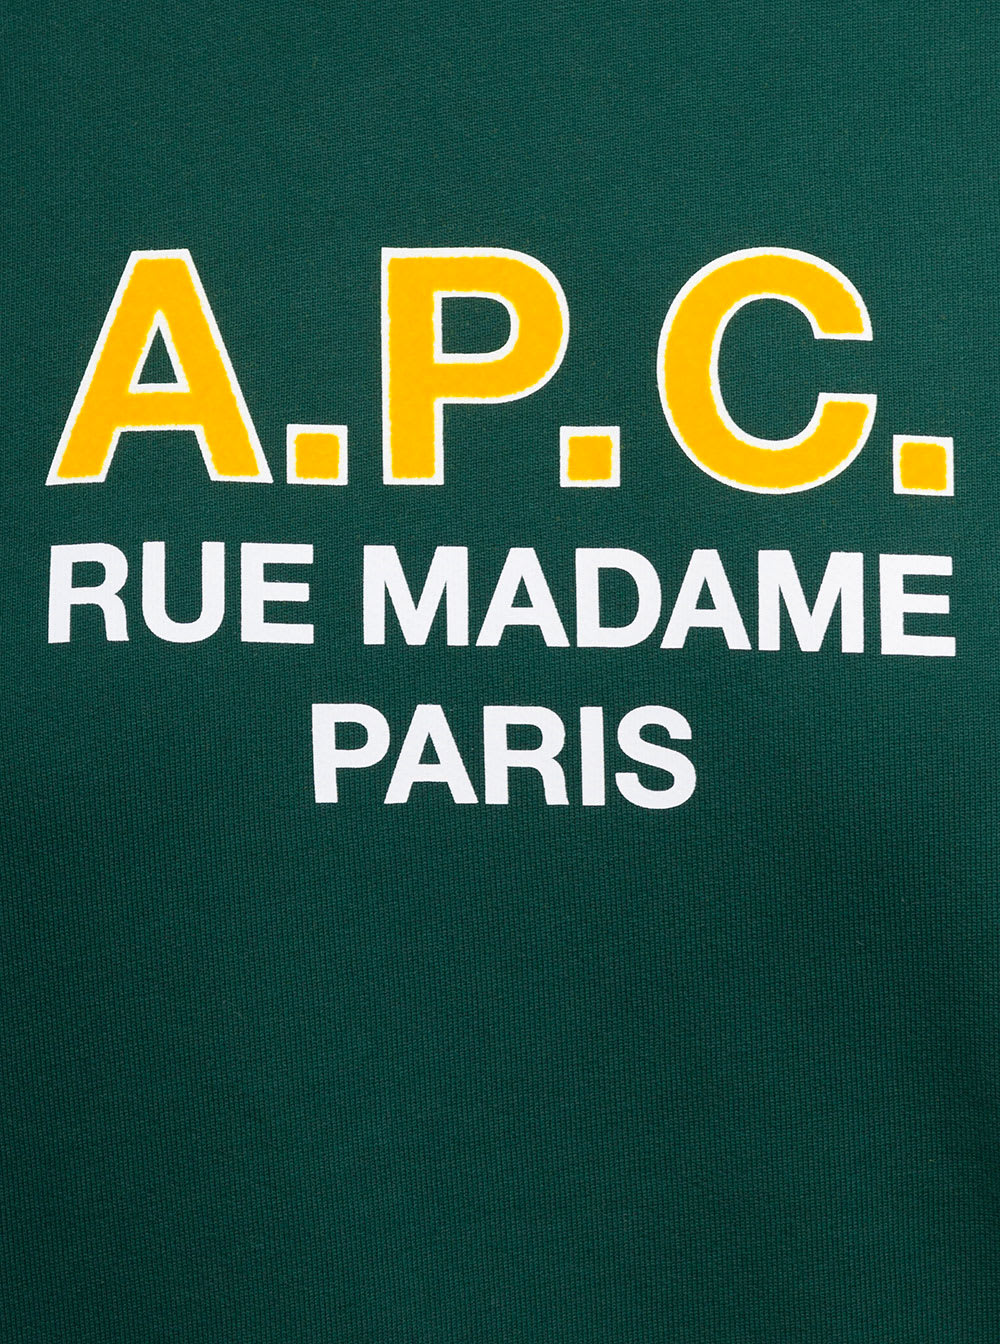 Shop Apc Madame Green Crewneck Sweatshirt With Contrasting Logo Print In Cotton Woman